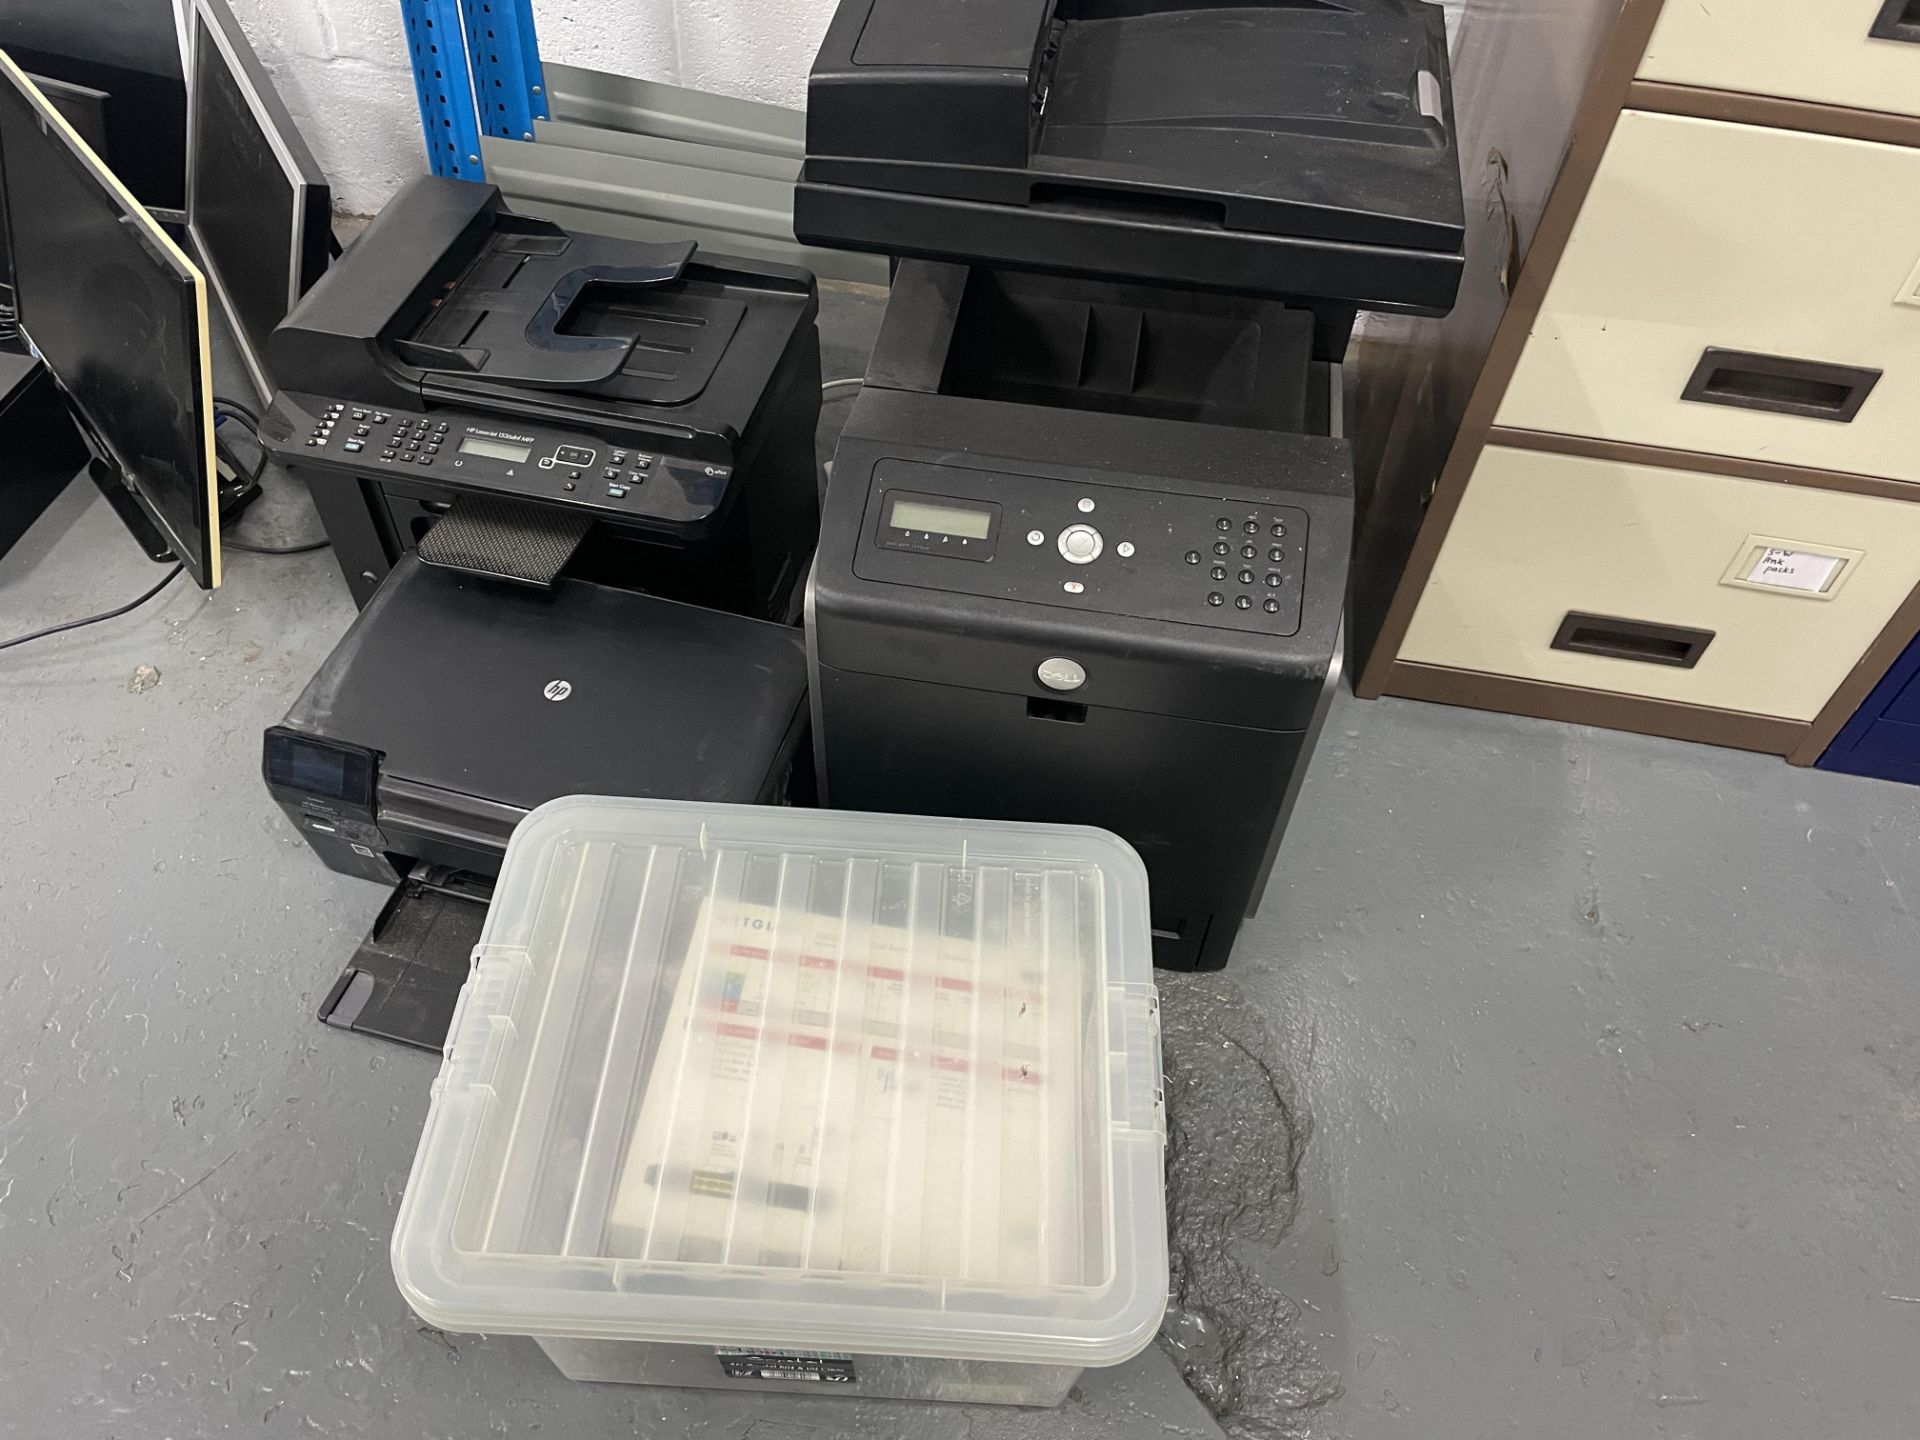 3 x Office Printers - HP Laser Jet 1536 DNF MPF Printer & Scanner, Dell MFP Laserjet 3115 Printer, H